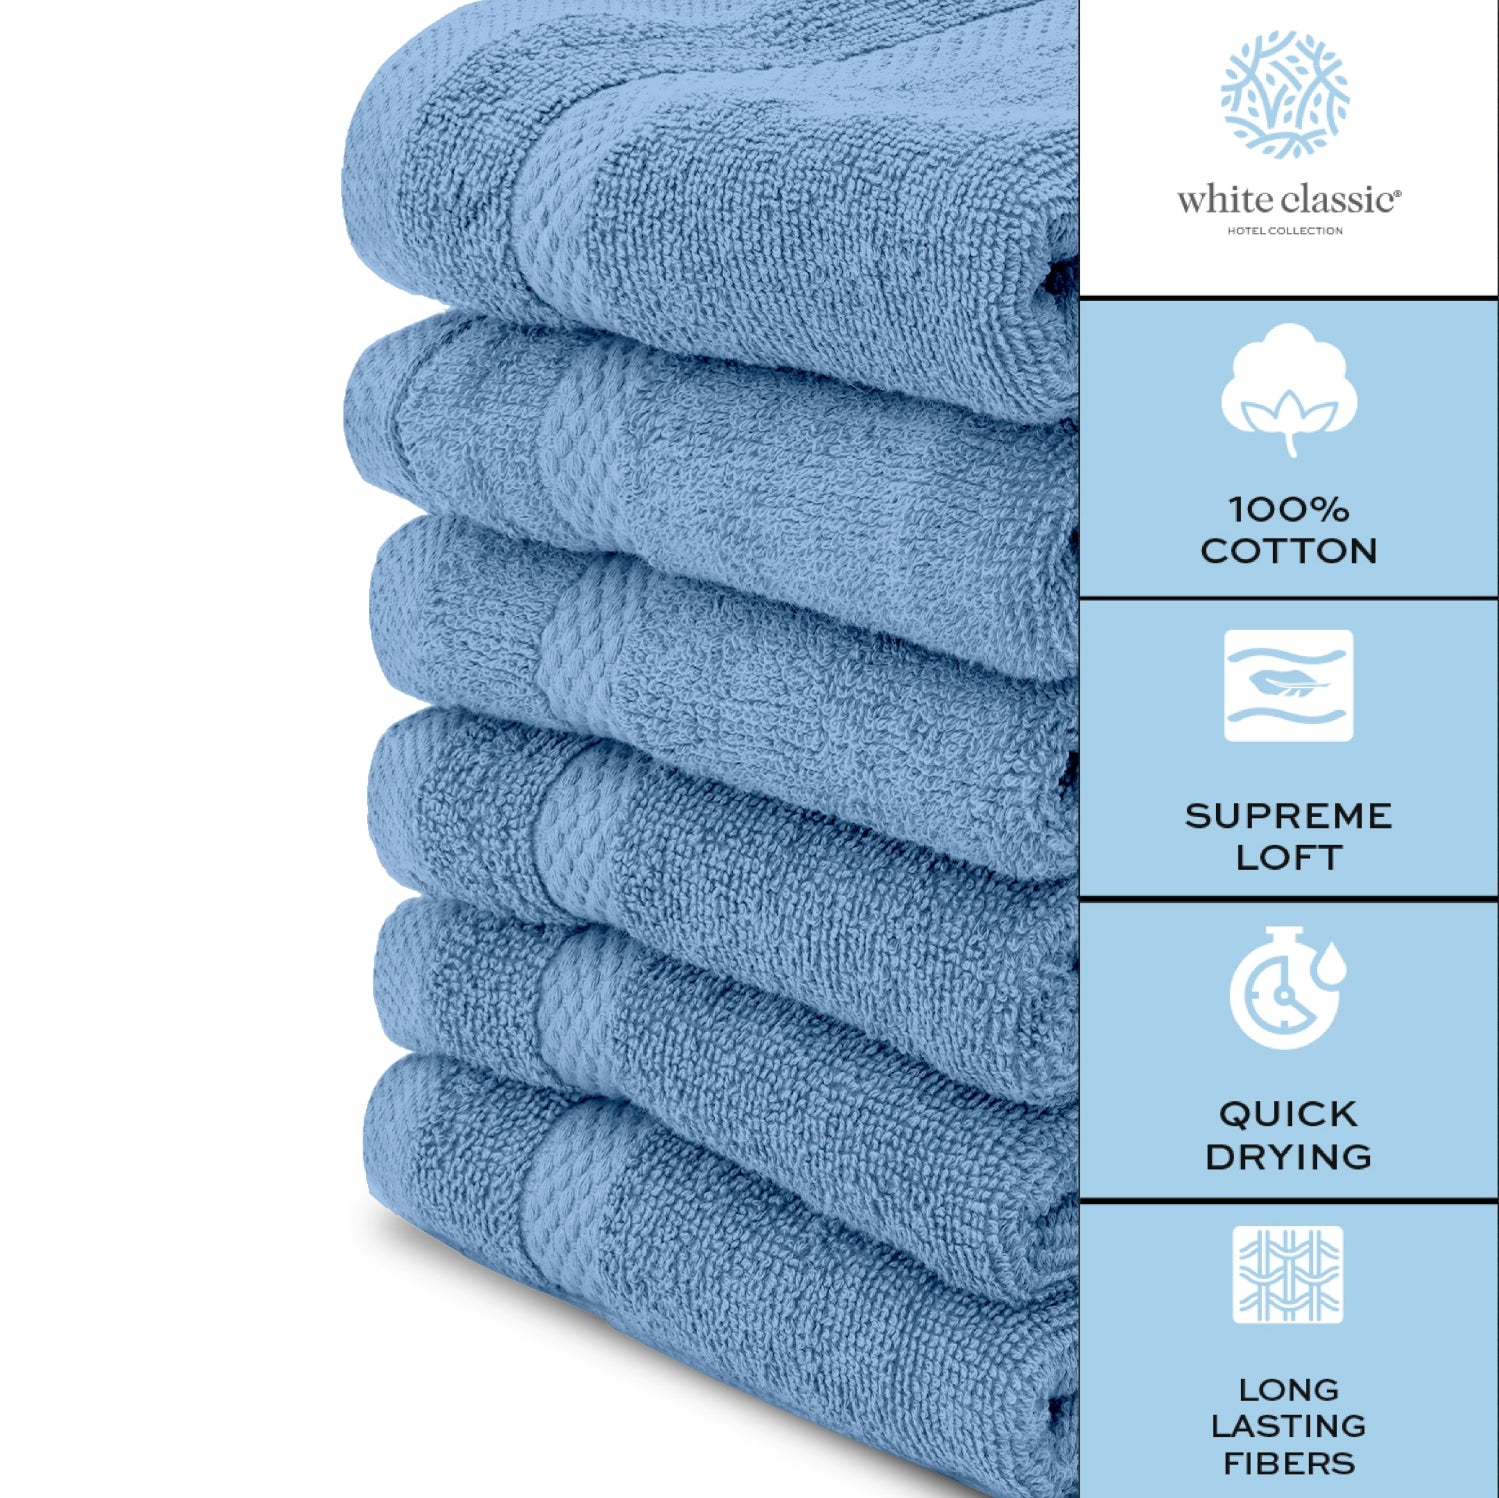 Luxury Hotel Style Towels – Poppy